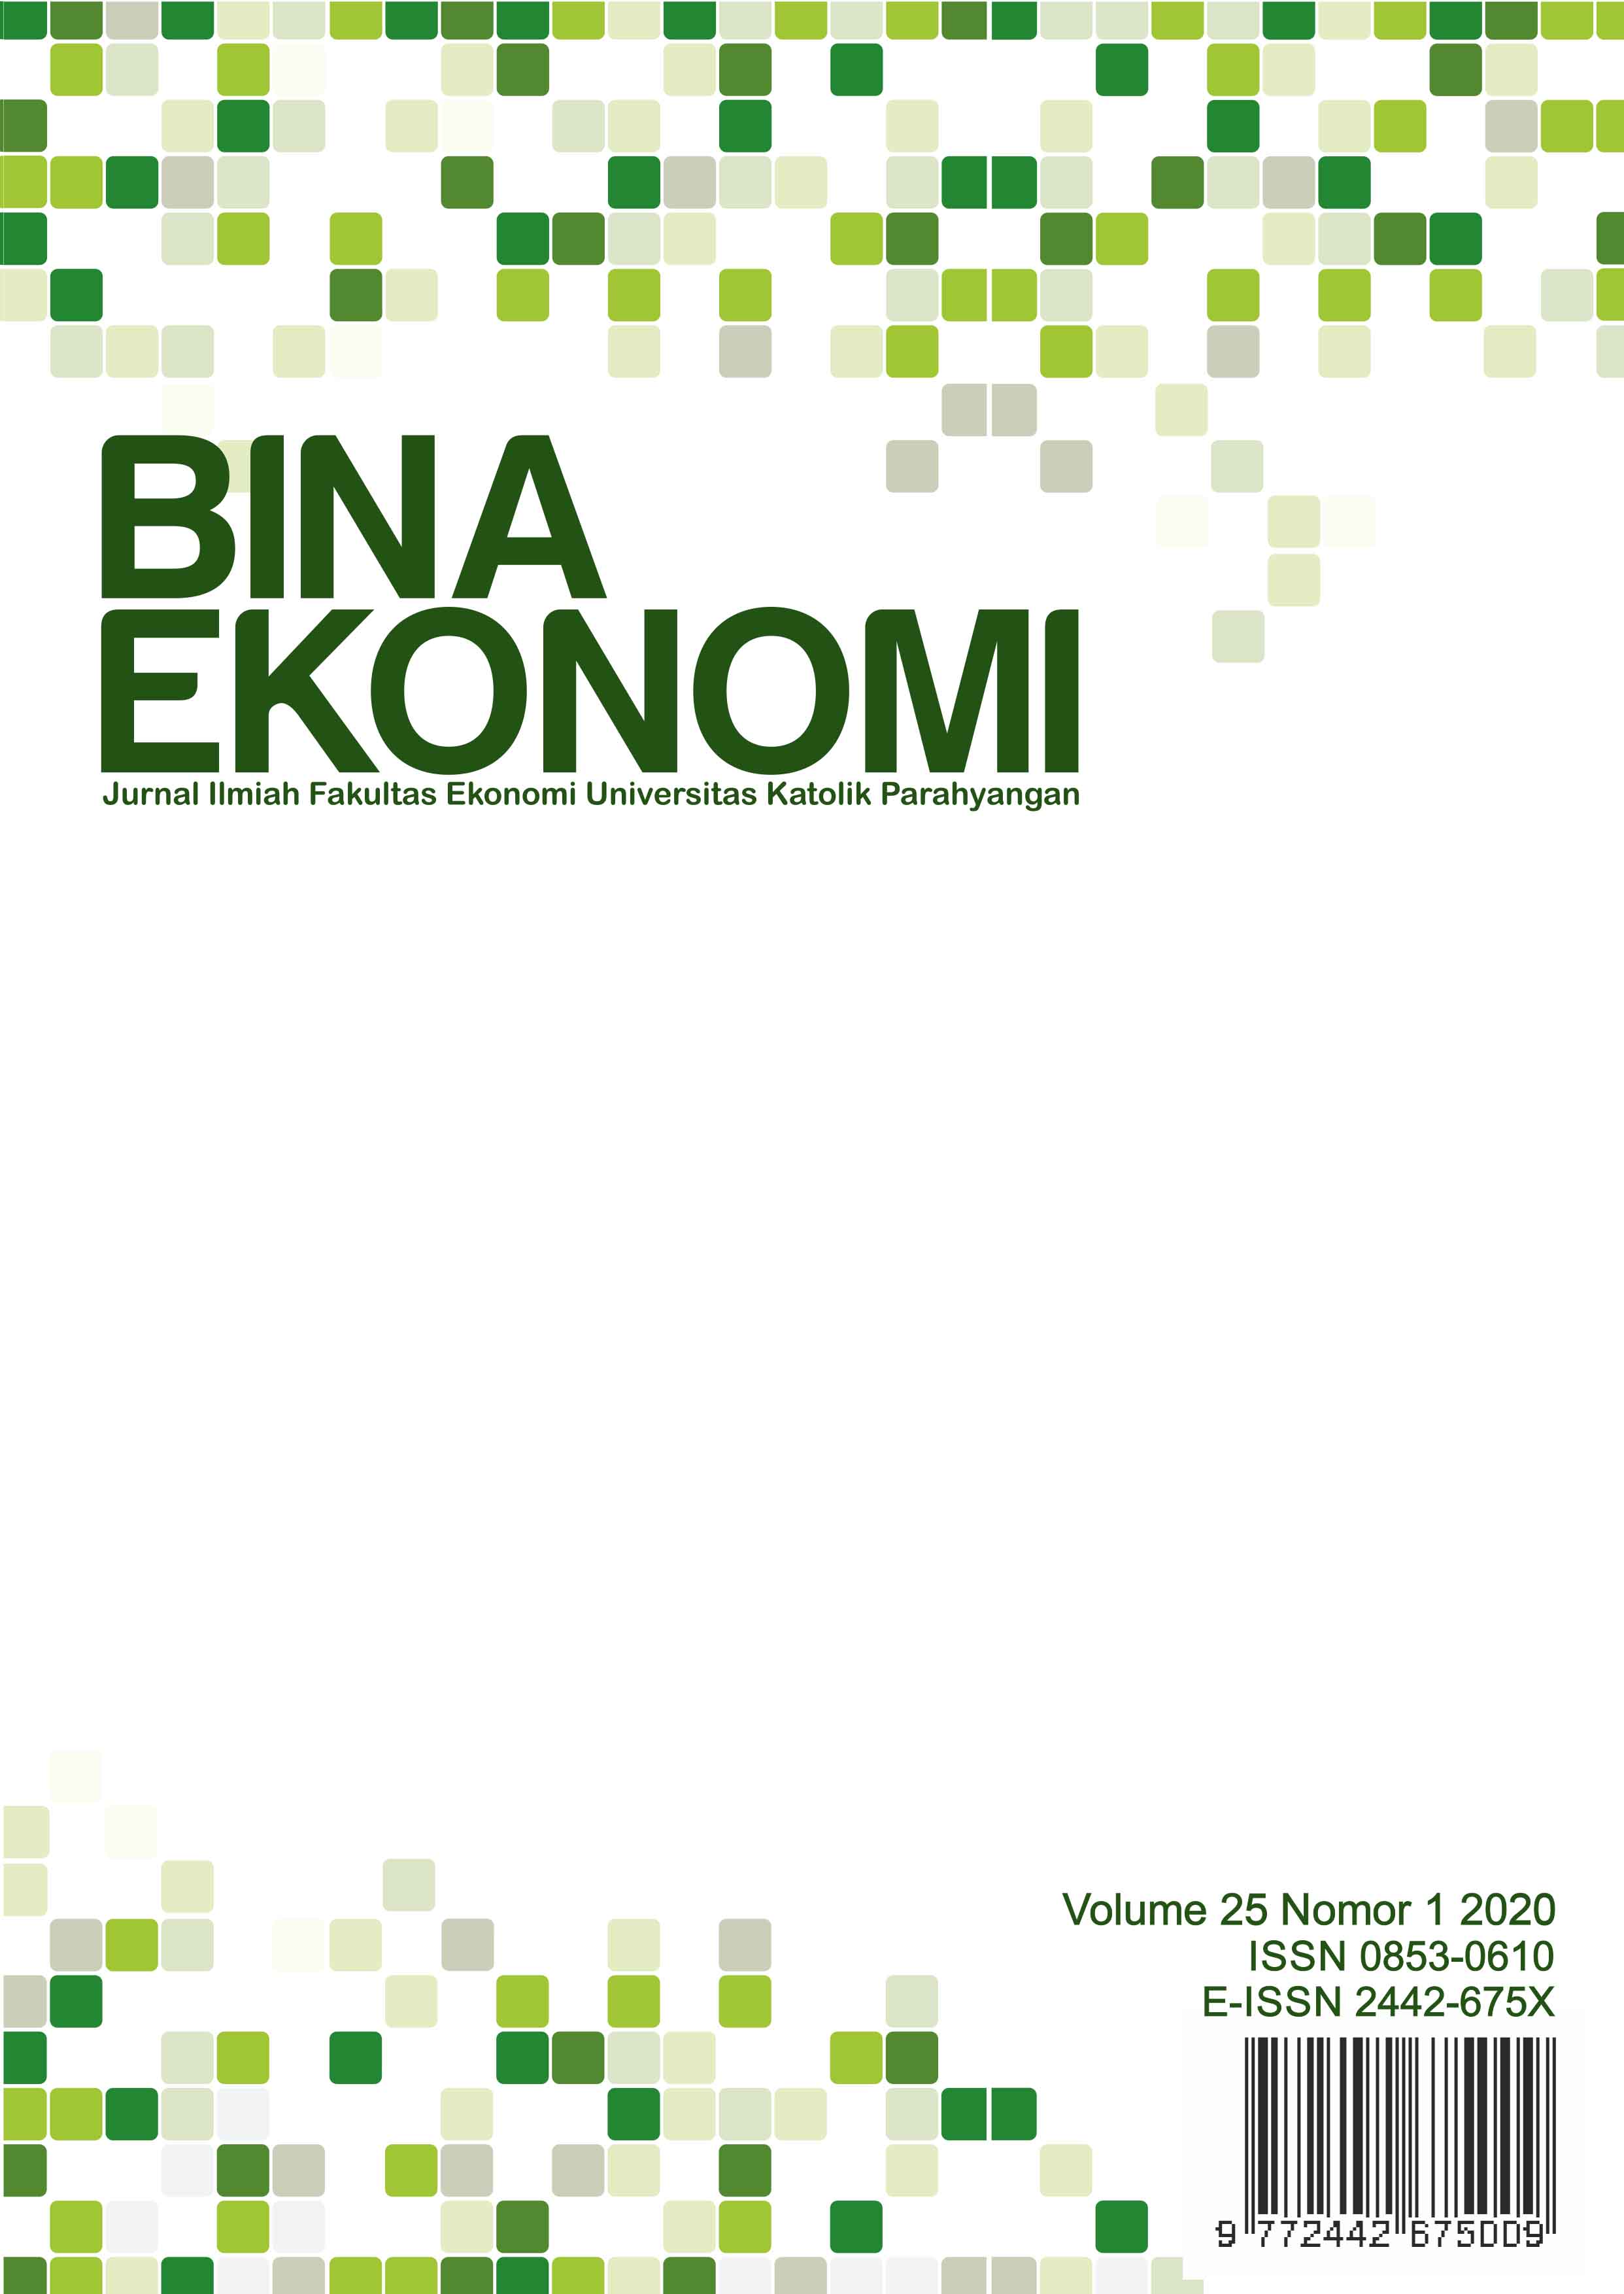 					View Vol. 24 No. 1 (2020): Bina Ekonomi: Majalah Ilmiah Fakultas Ekonomi Universitas Katolik Parahyangan
				